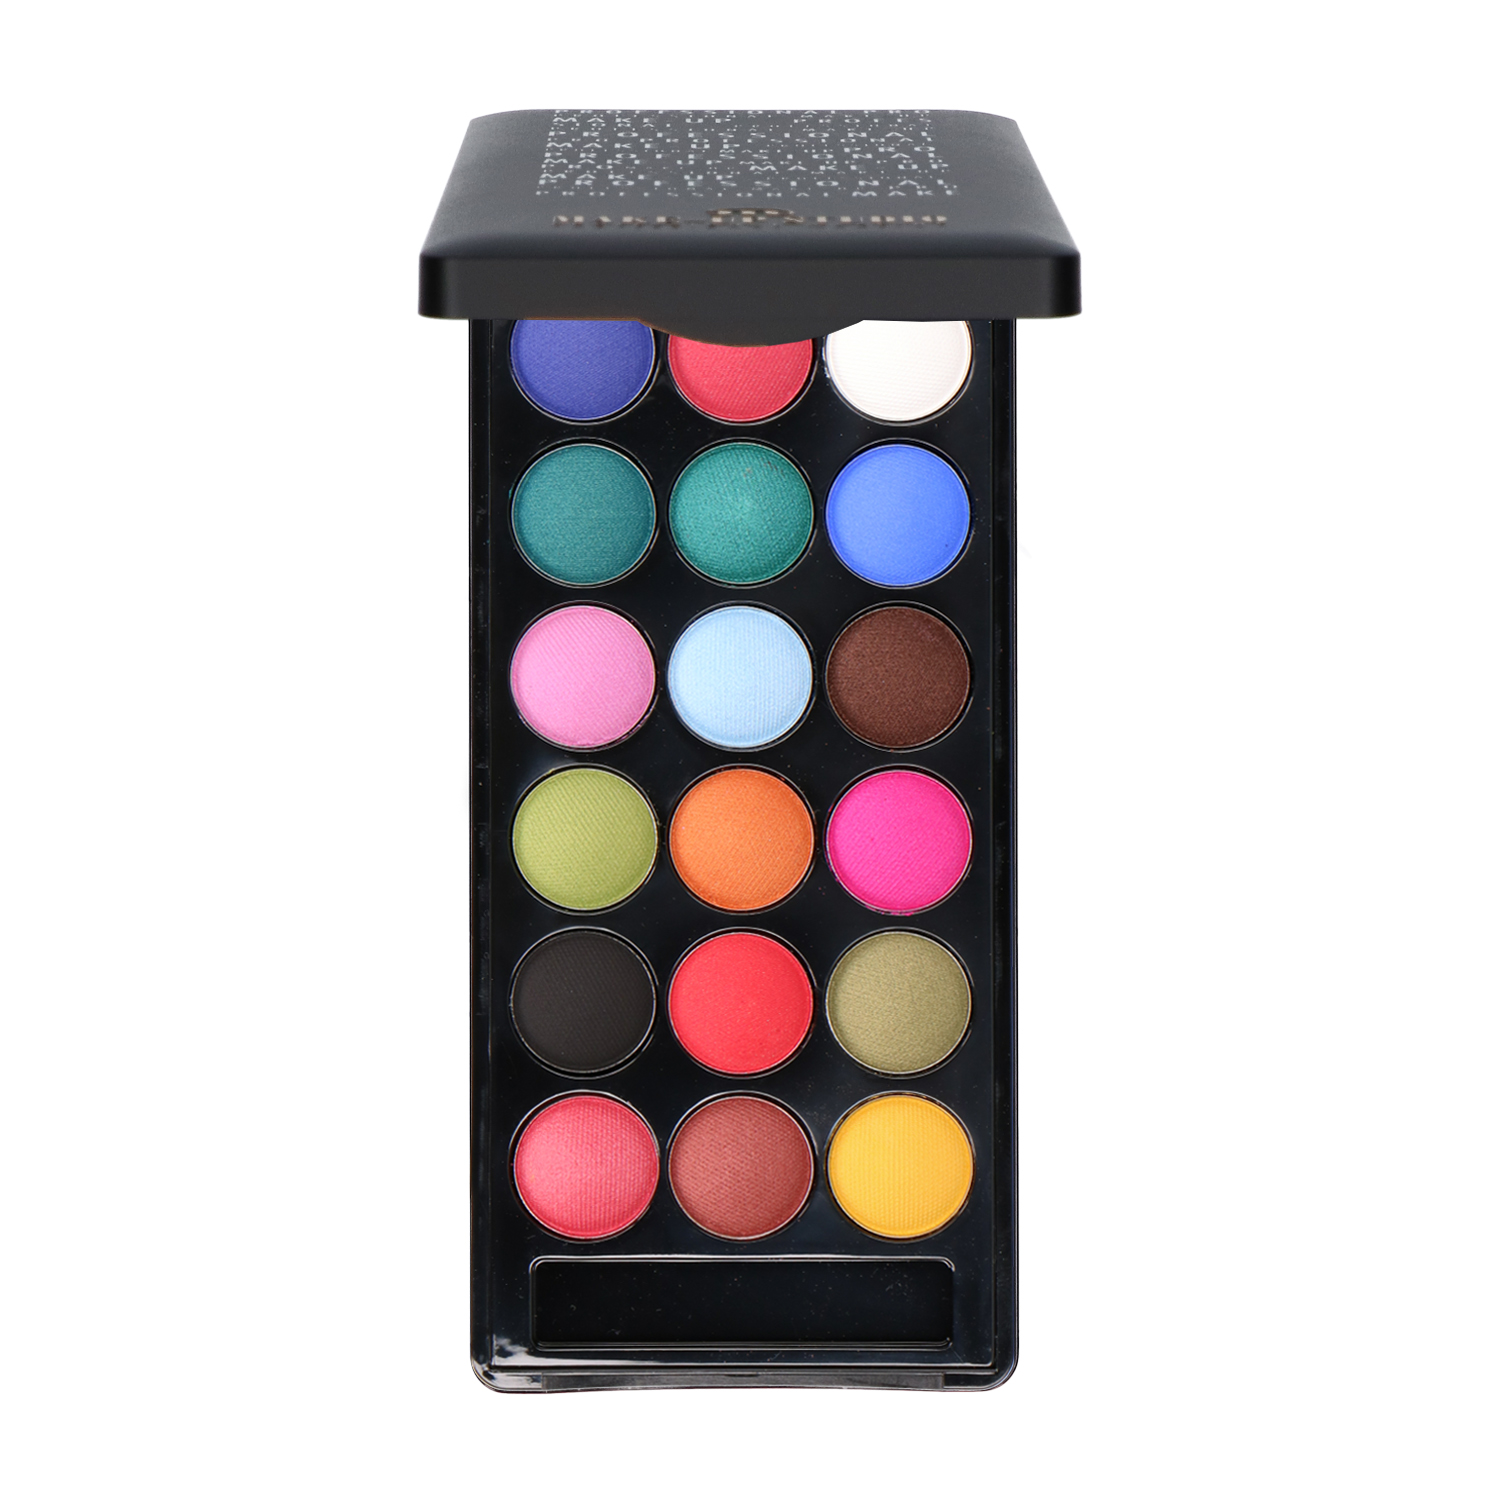 Make-up Studio Eyeshadow box 18 kleuren